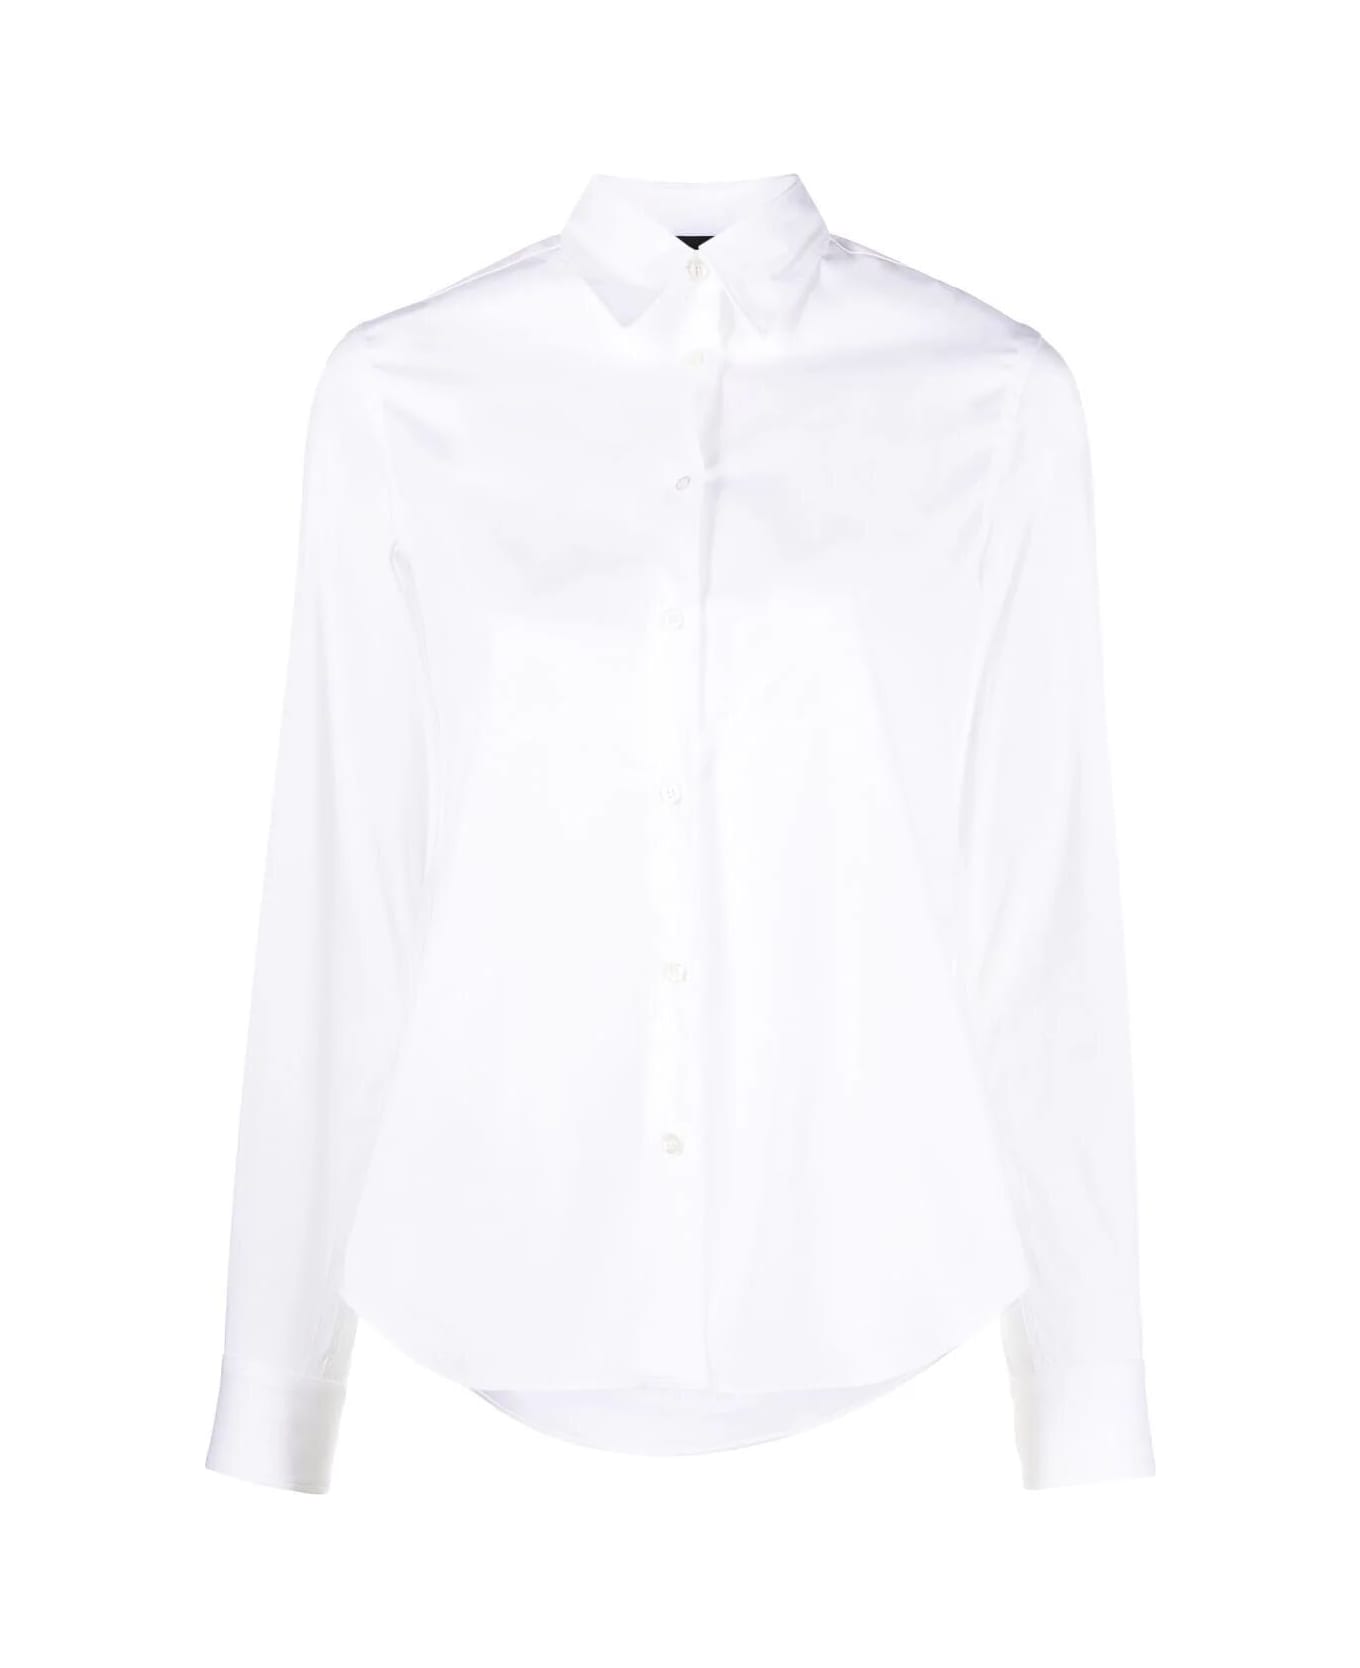 Aspesi Mod 5422 Shirt - White